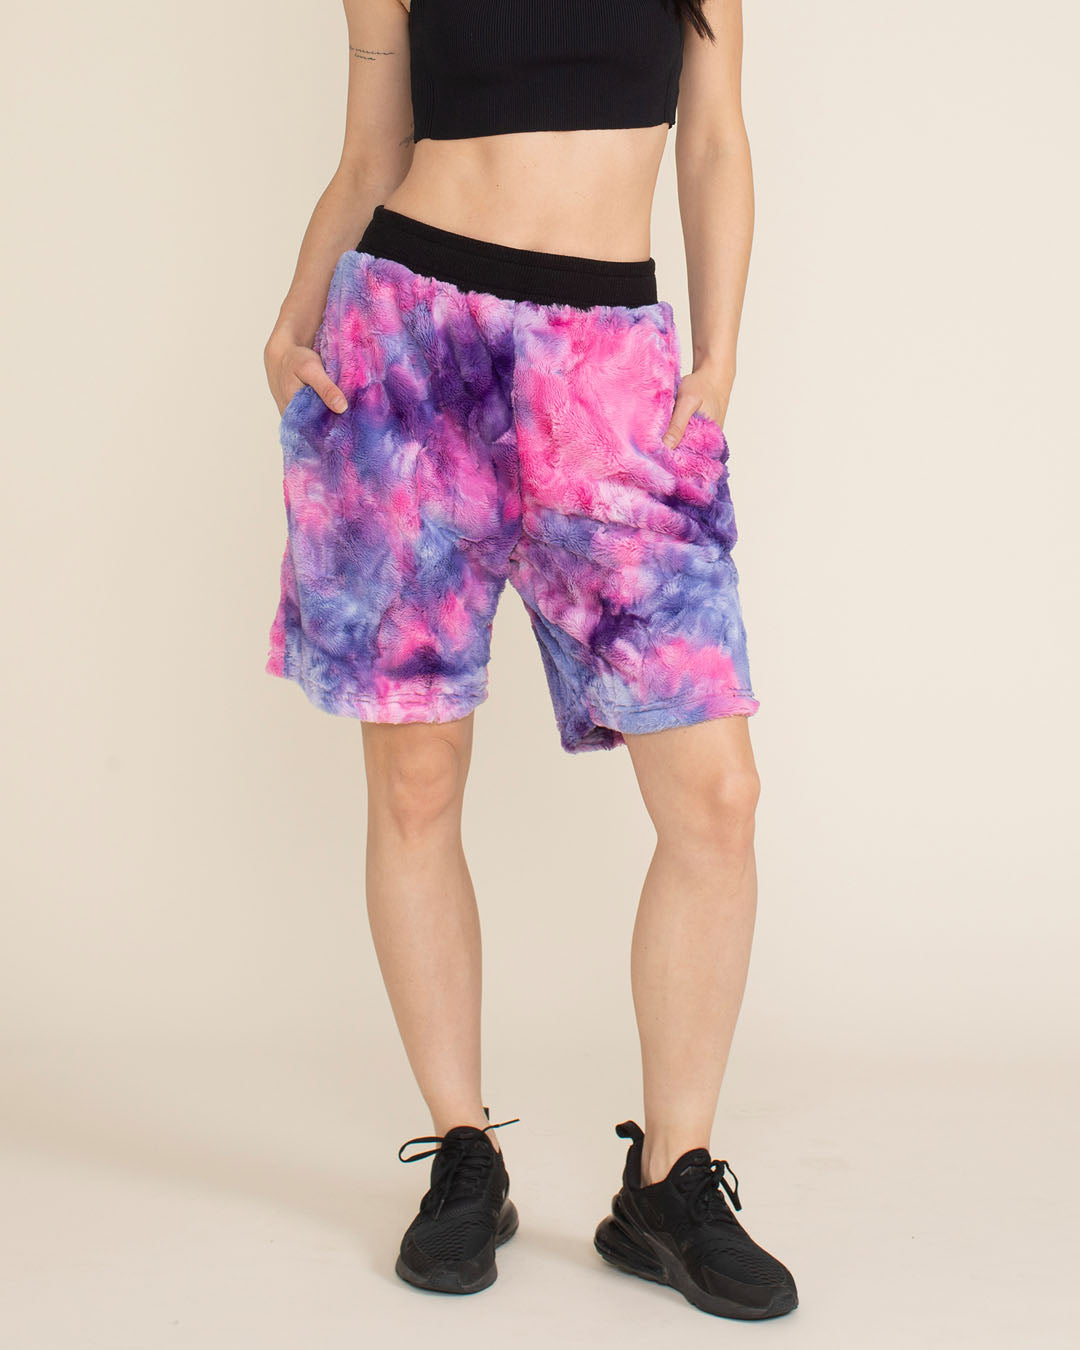 Cotton Candy Kitty Ultra Soft Faux Fur Sweat Shorts | Women's